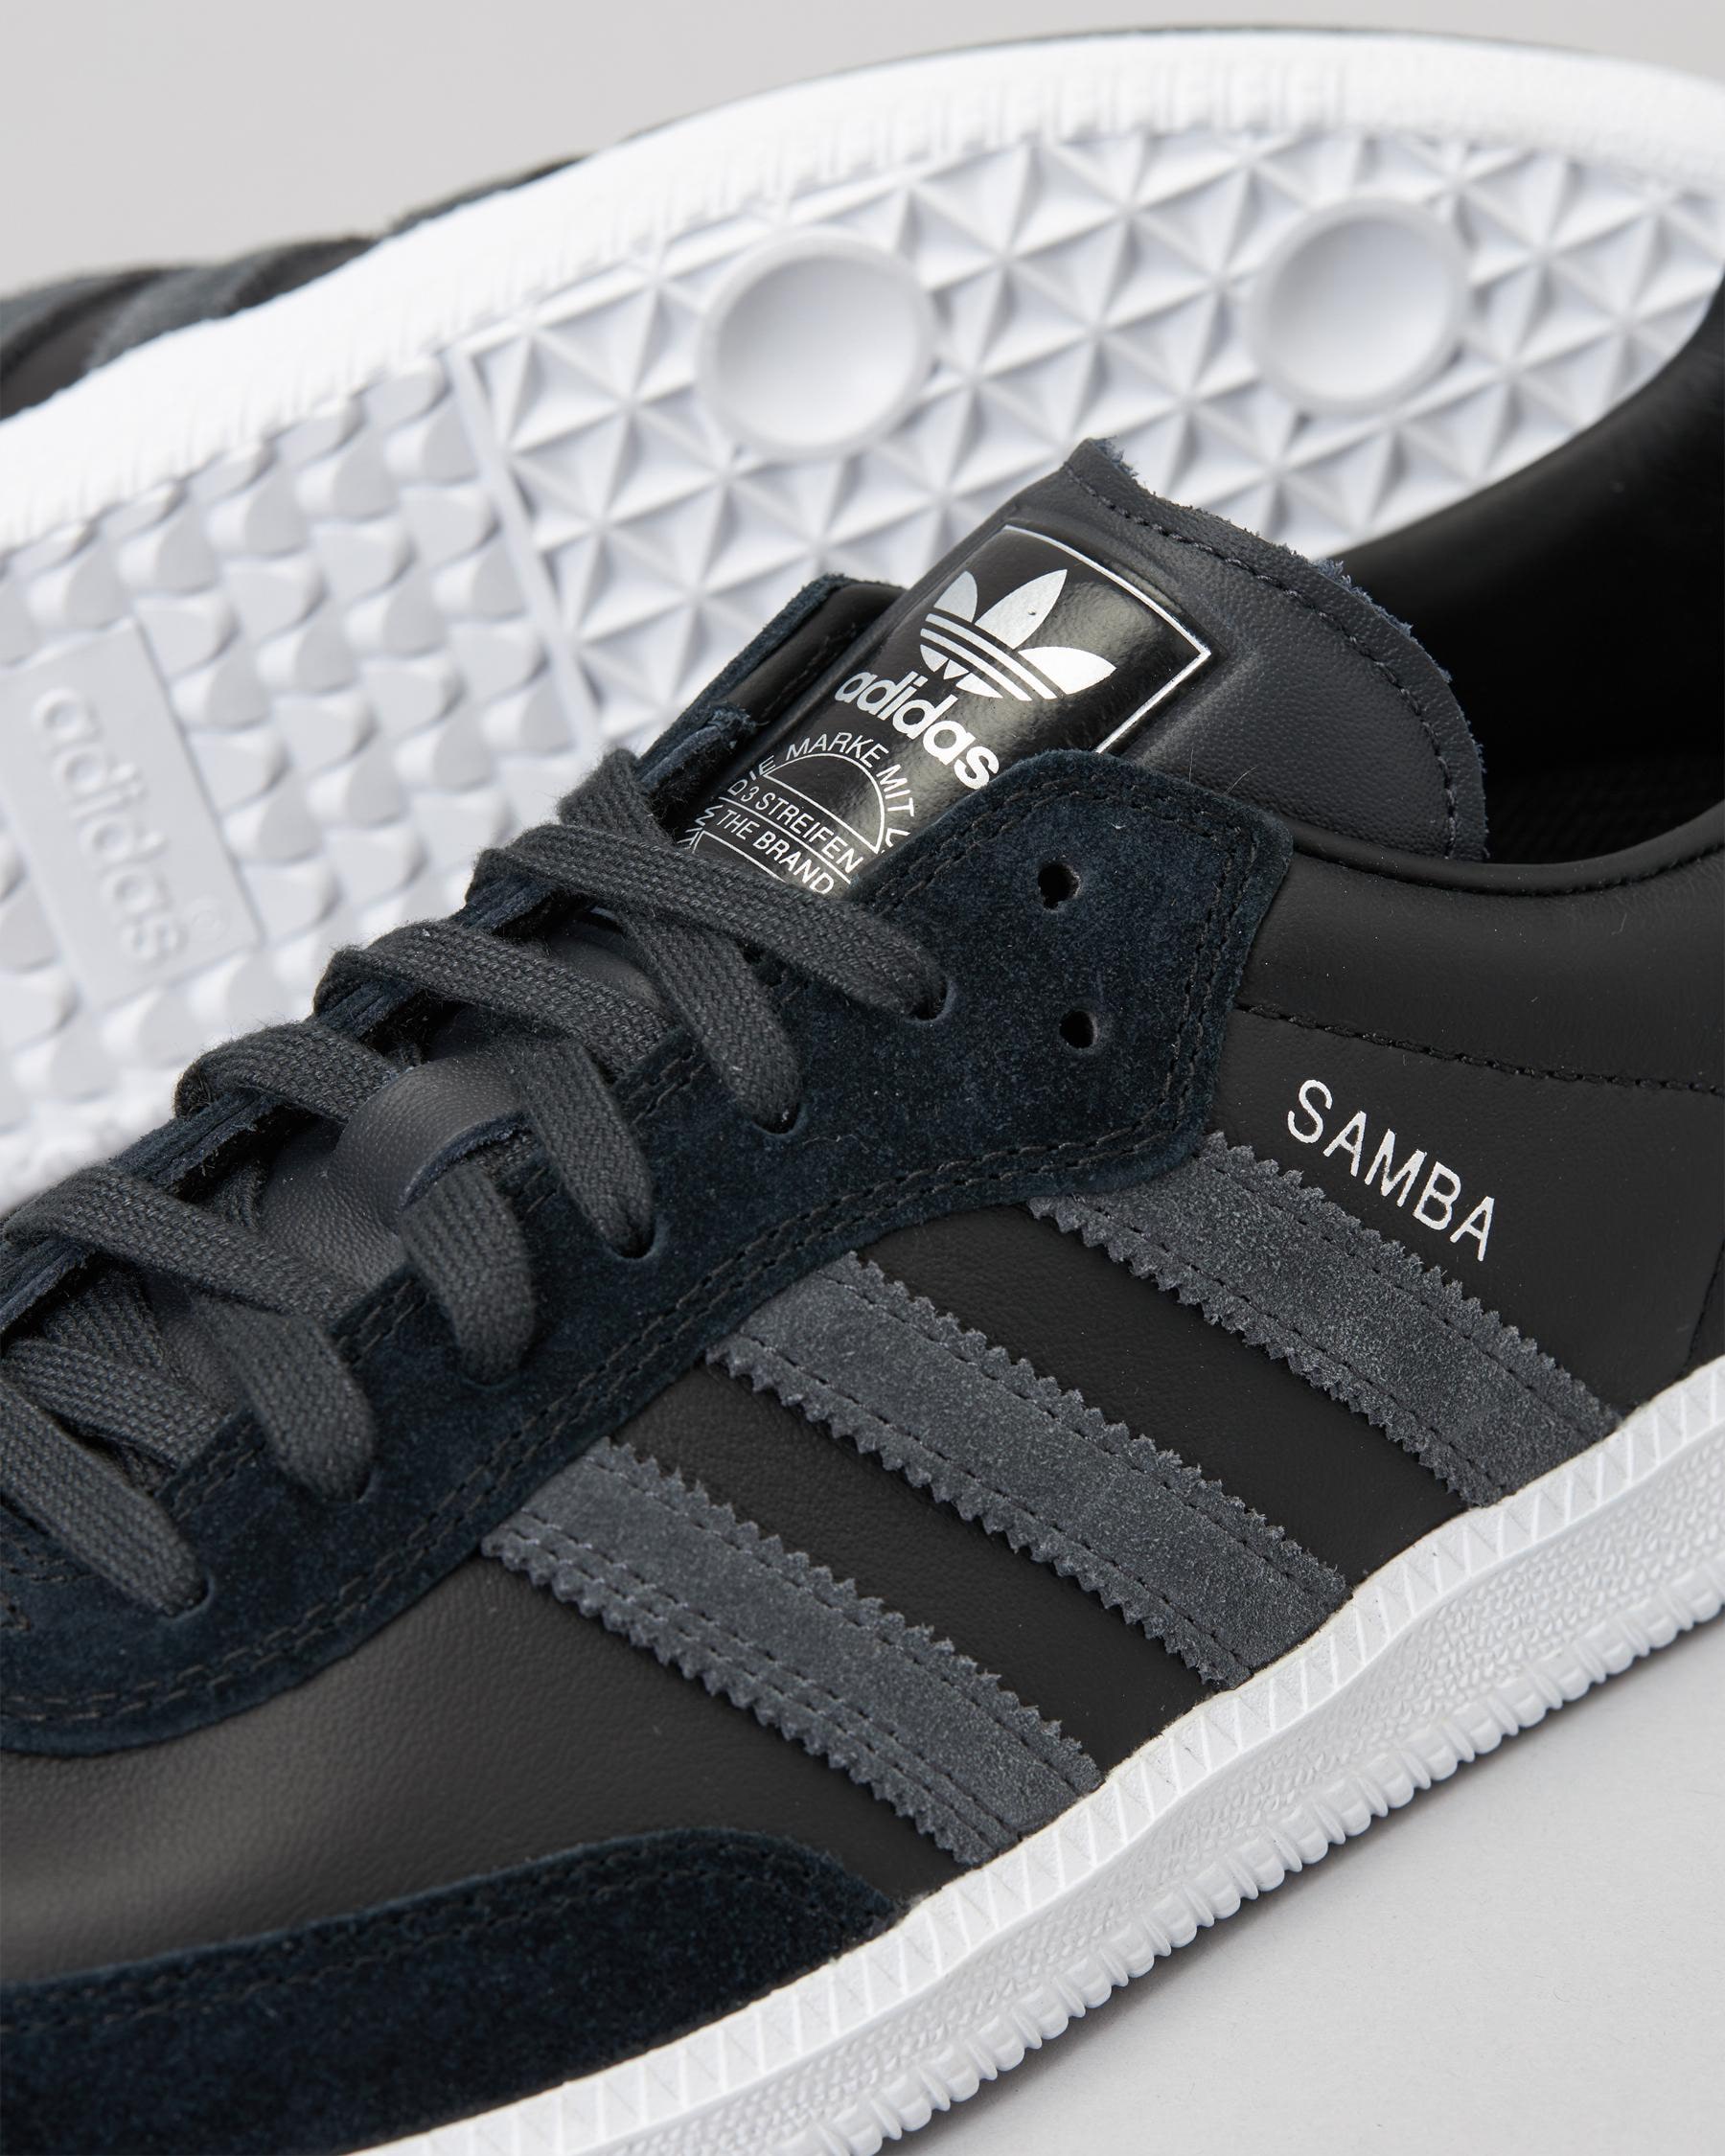 Adidas Samba Adv Shoes In Core Black/carbon/silver - FREE